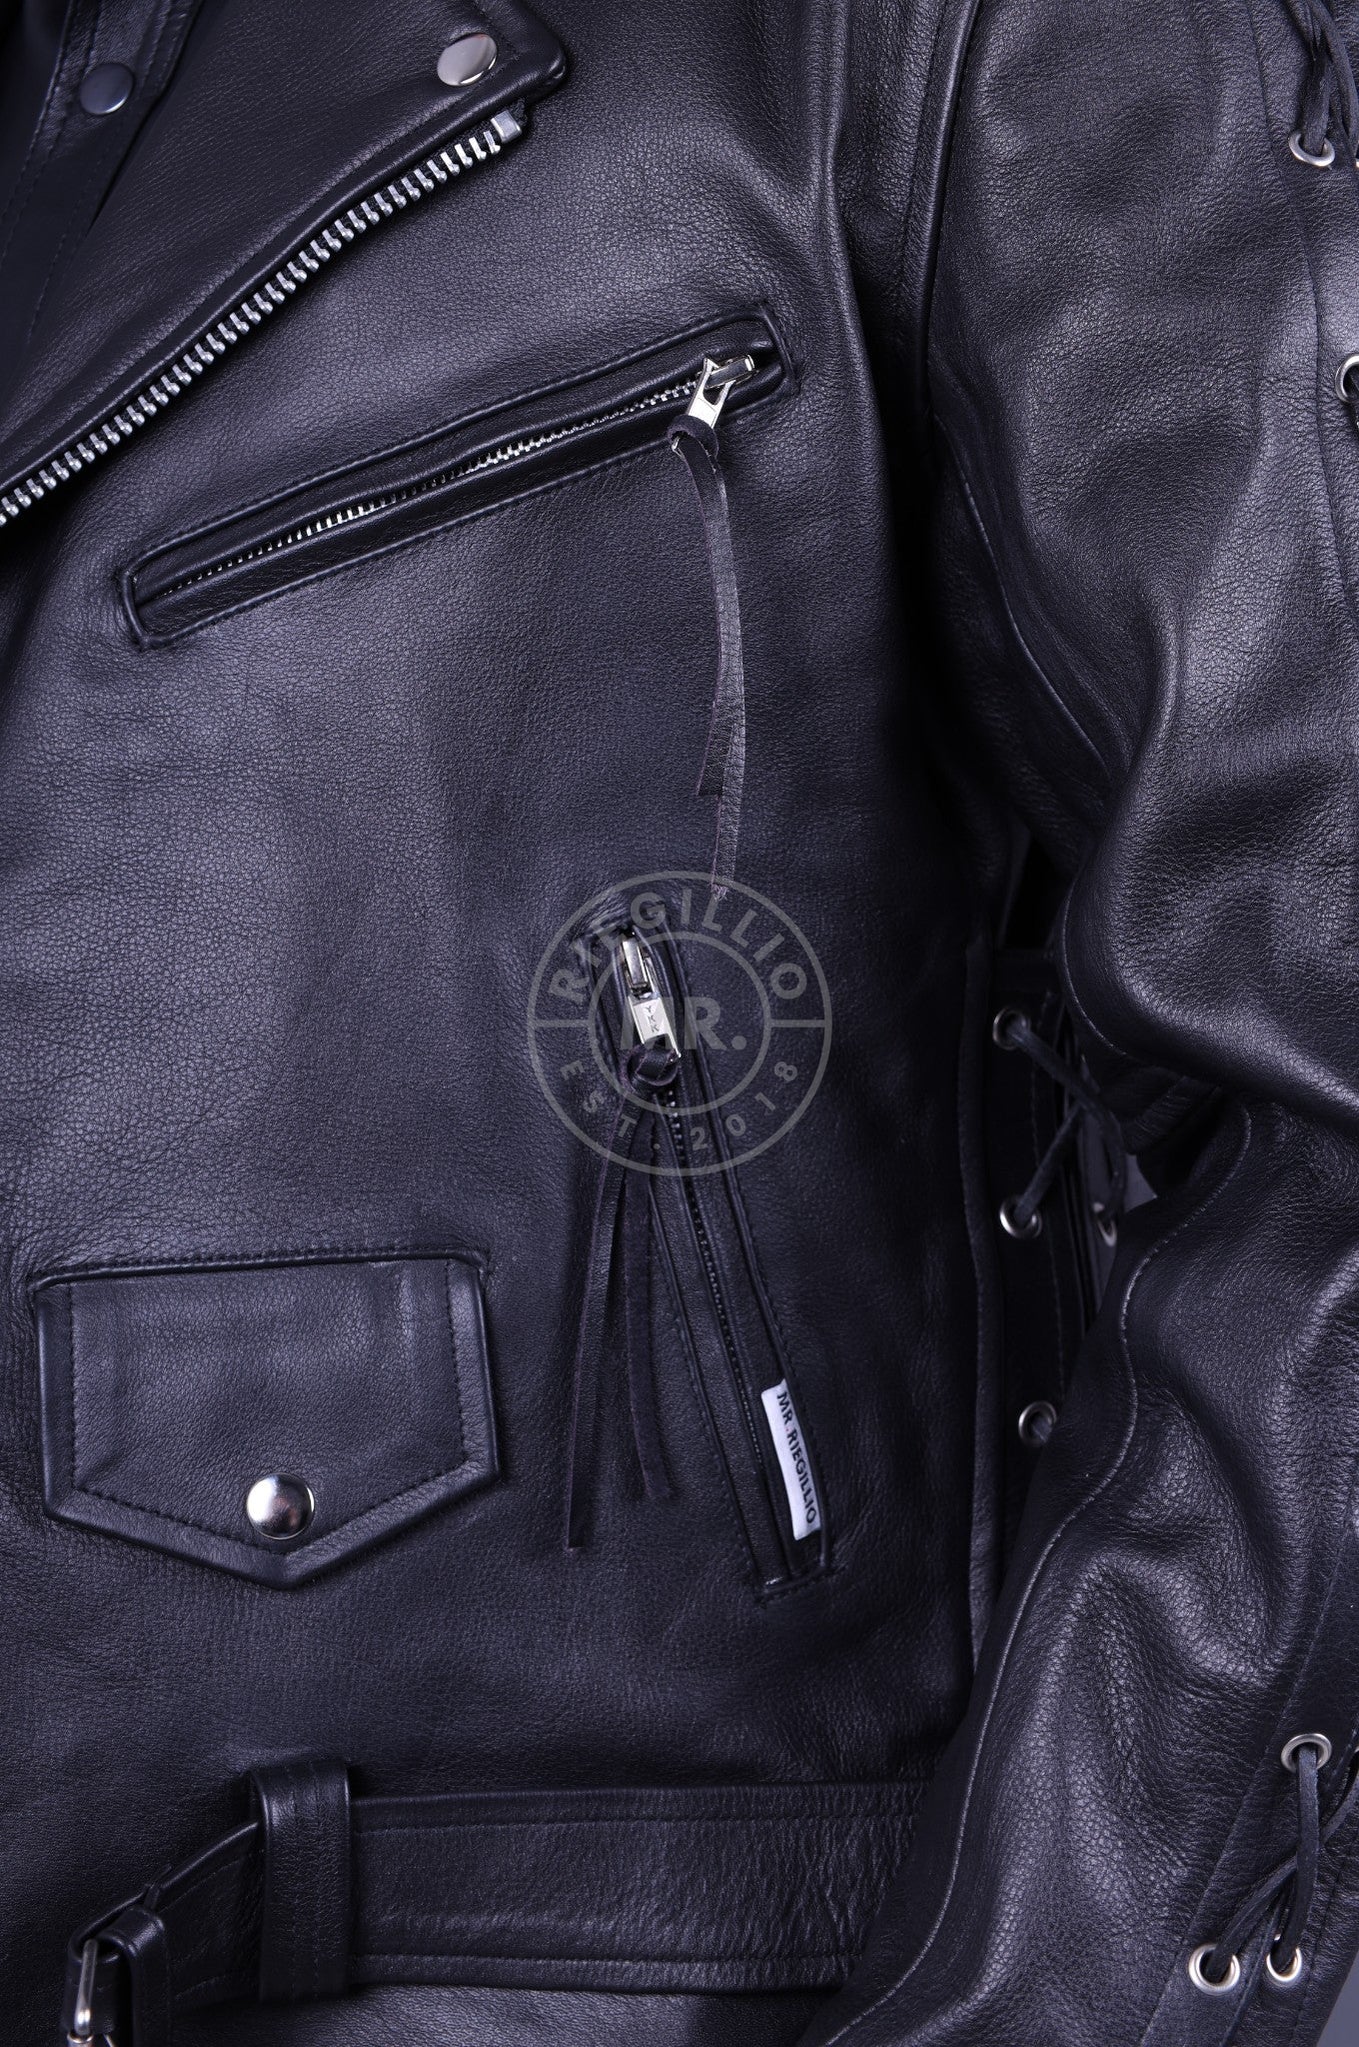 Black Leather Lace Up Brando Jacket at MR. Riegillio